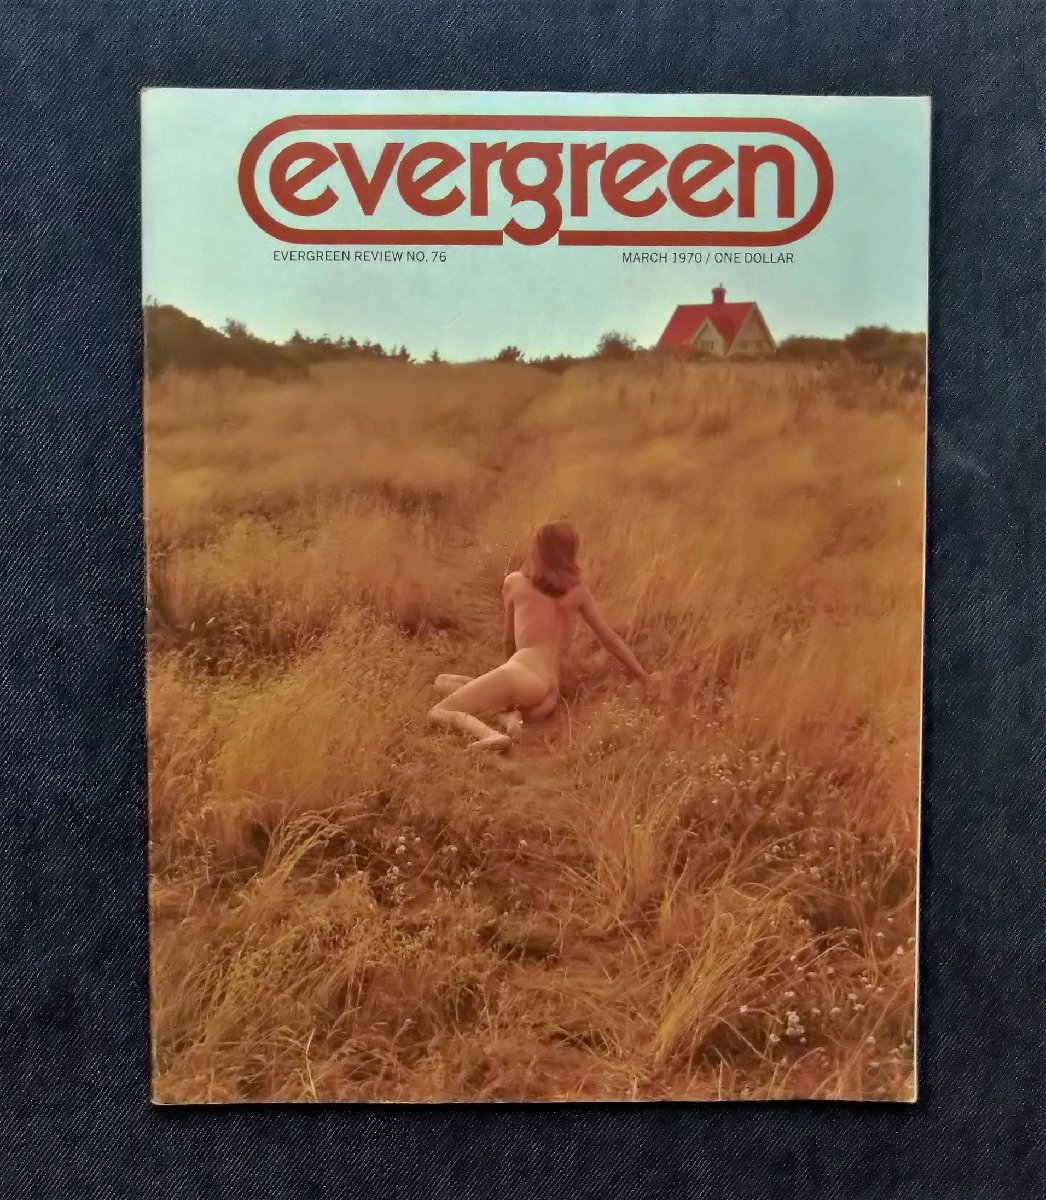 1970 year Evergreen Review foreign book Ed * Sanders /re-mon* belt Ran Raymond Bertrand/yaro Mill *ireshu/Al Young/ front . literature beet ni